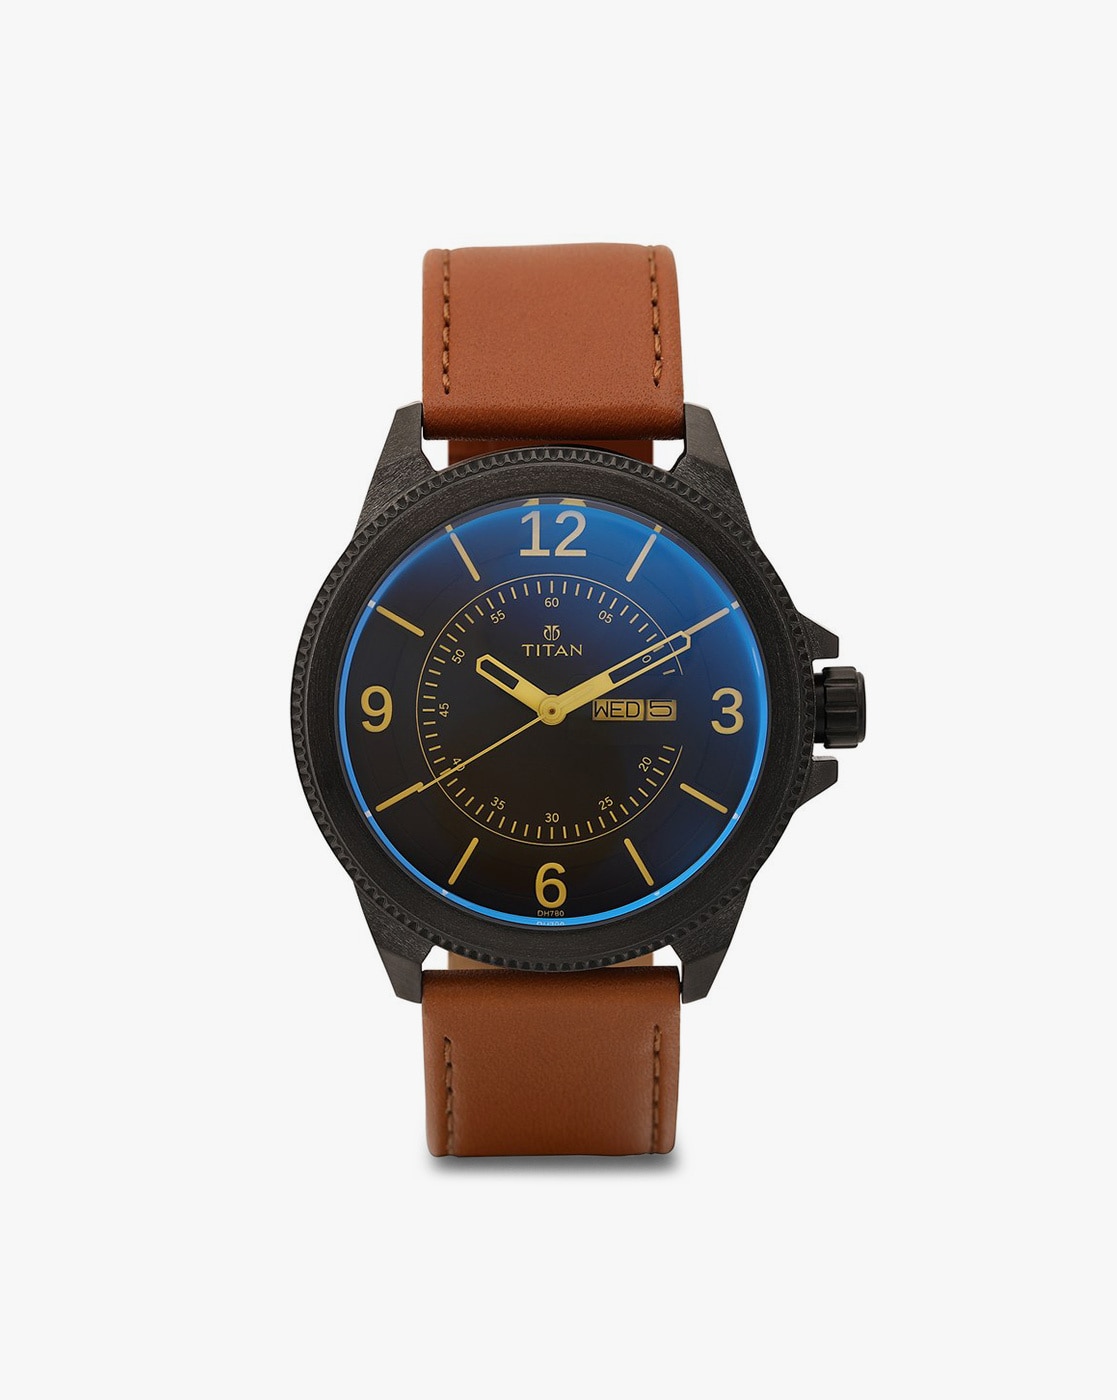 Titan 90116QM02 Smart Watch Black Metal Hybrid Smartwatch Watch for Men –  Better Vision